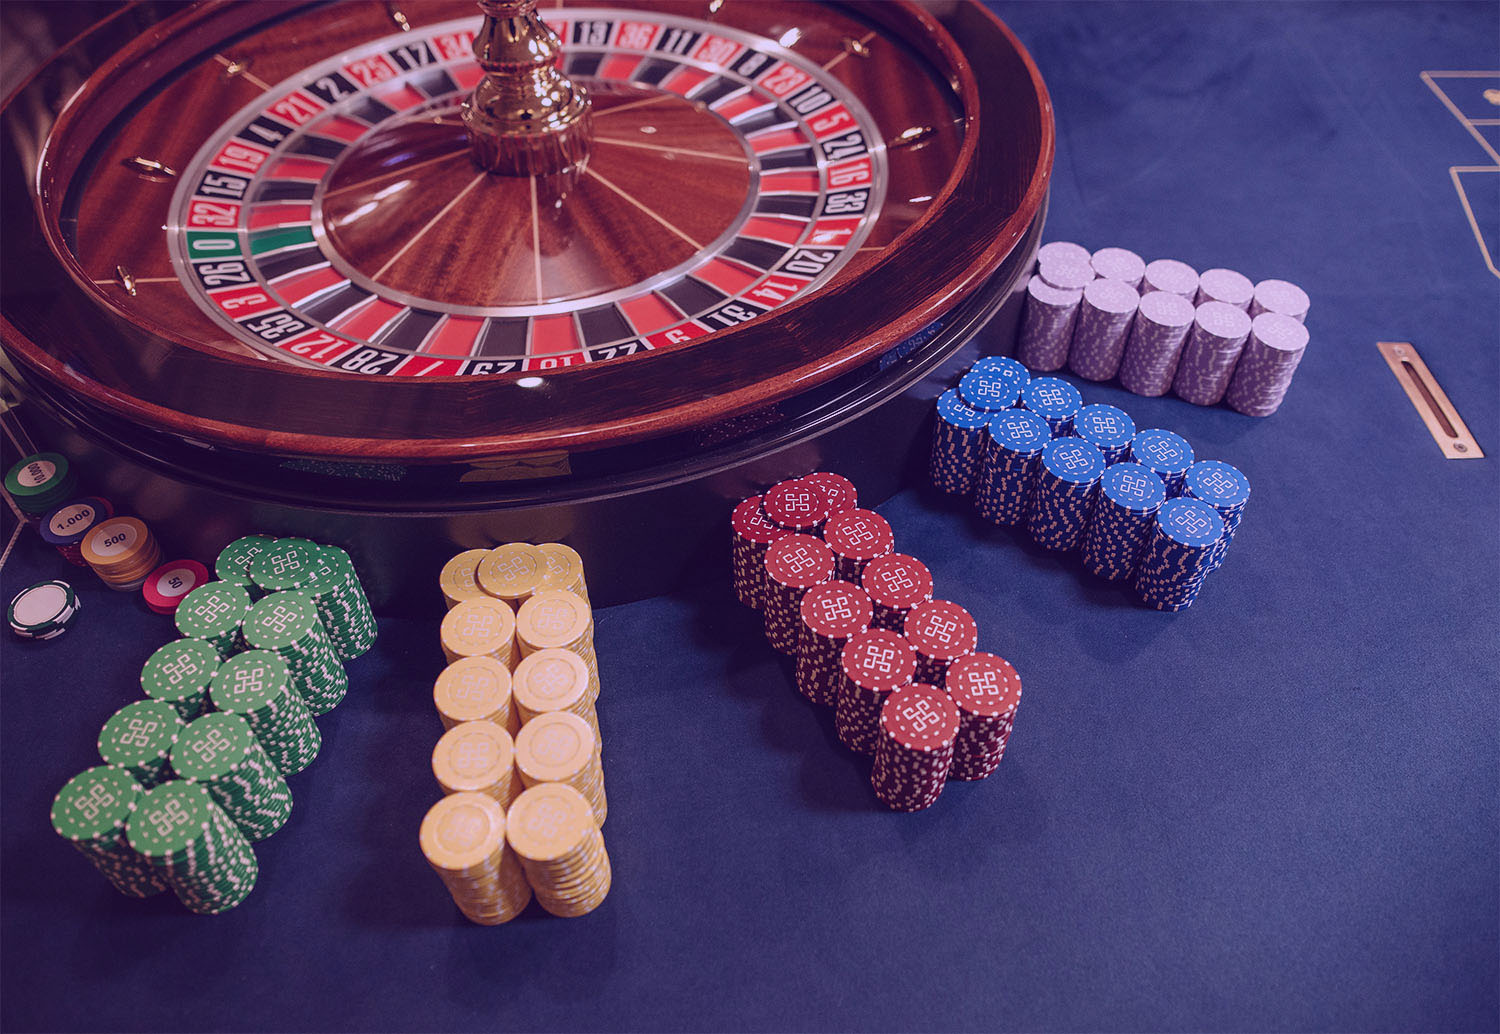 Секреты онлайн казино рулетка маг на полную ставку субтитры онлайн